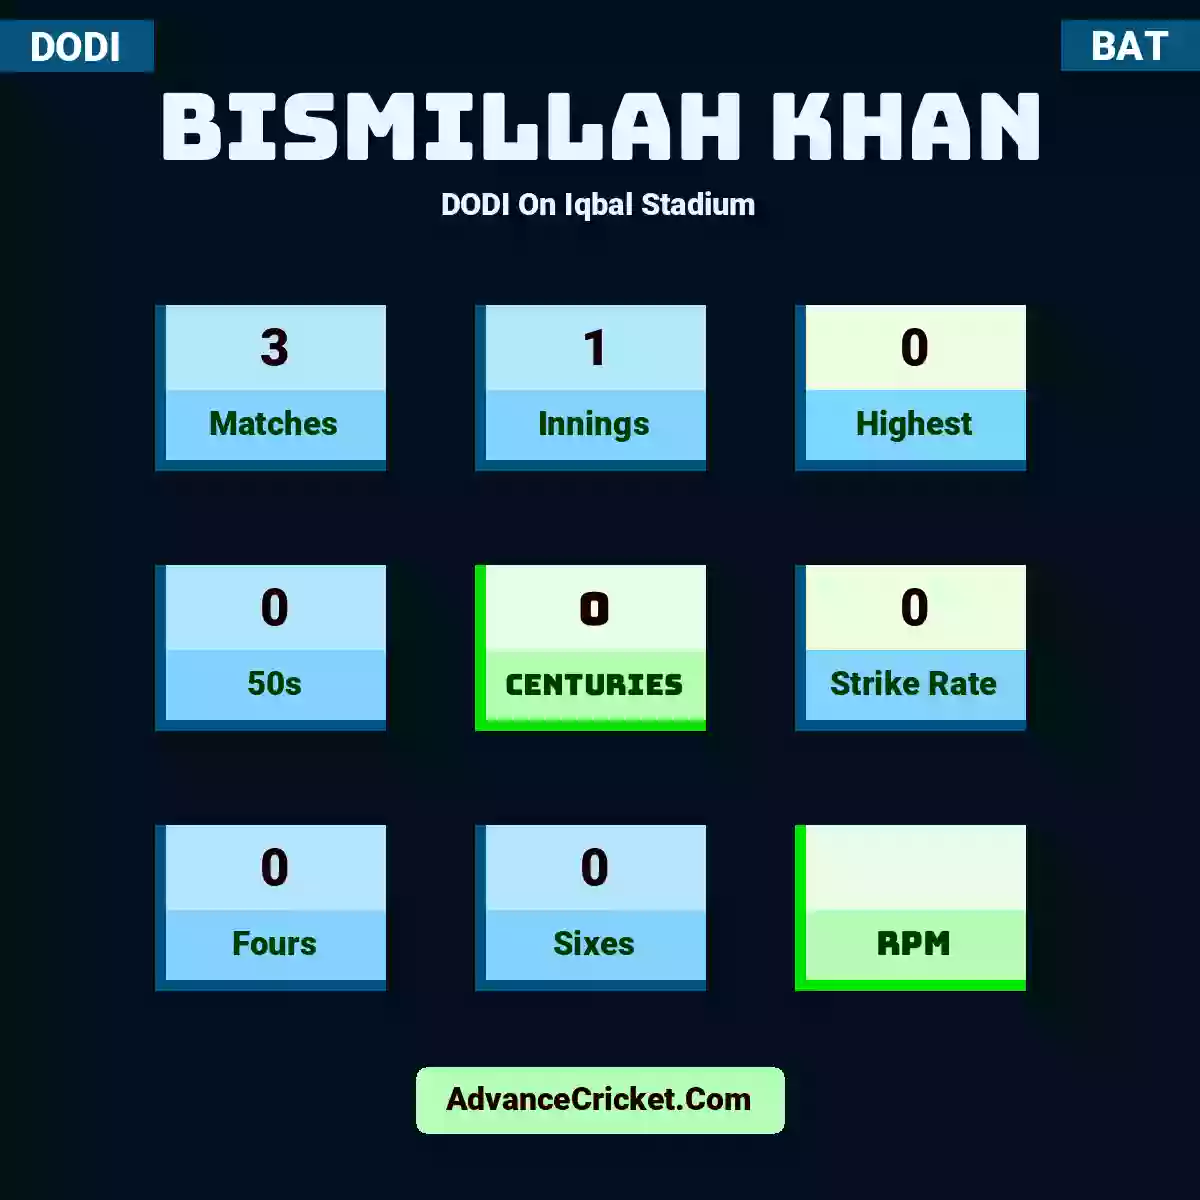 Bismillah Khan DODI  On Iqbal Stadium, Bismillah Khan played 3 matches, scored 0 runs as highest, 0 half-centuries, and 0 centuries, with a strike rate of 0. B.Khan hit 0 fours and 0 sixes.